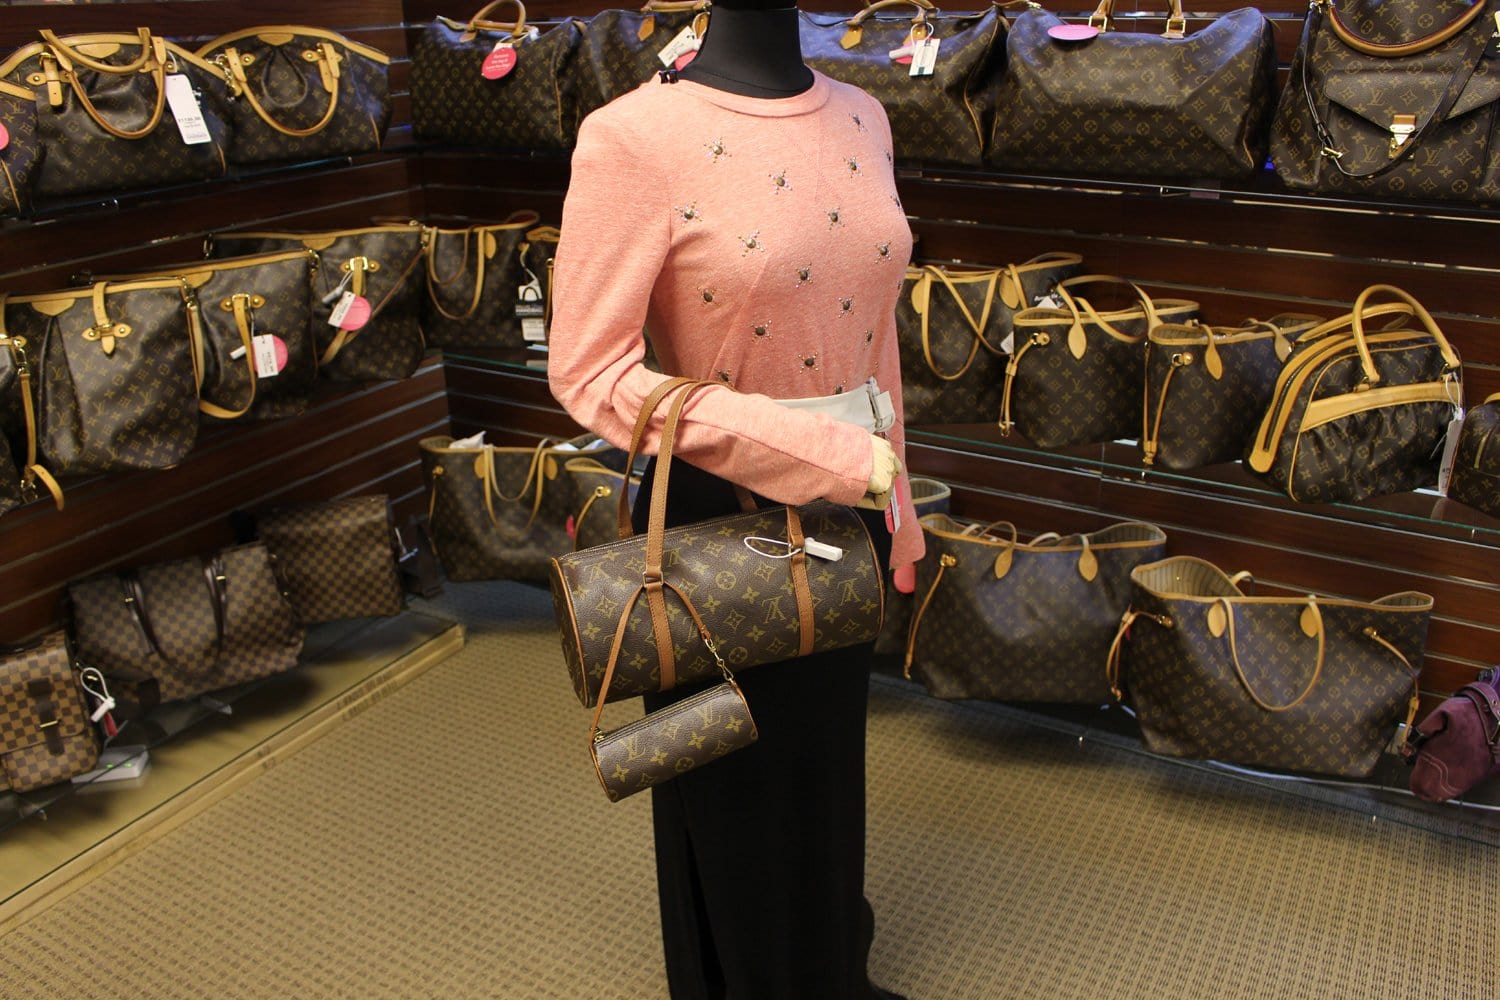 Papillon leather handbag Louis Vuitton Brown in Leather - 35027702